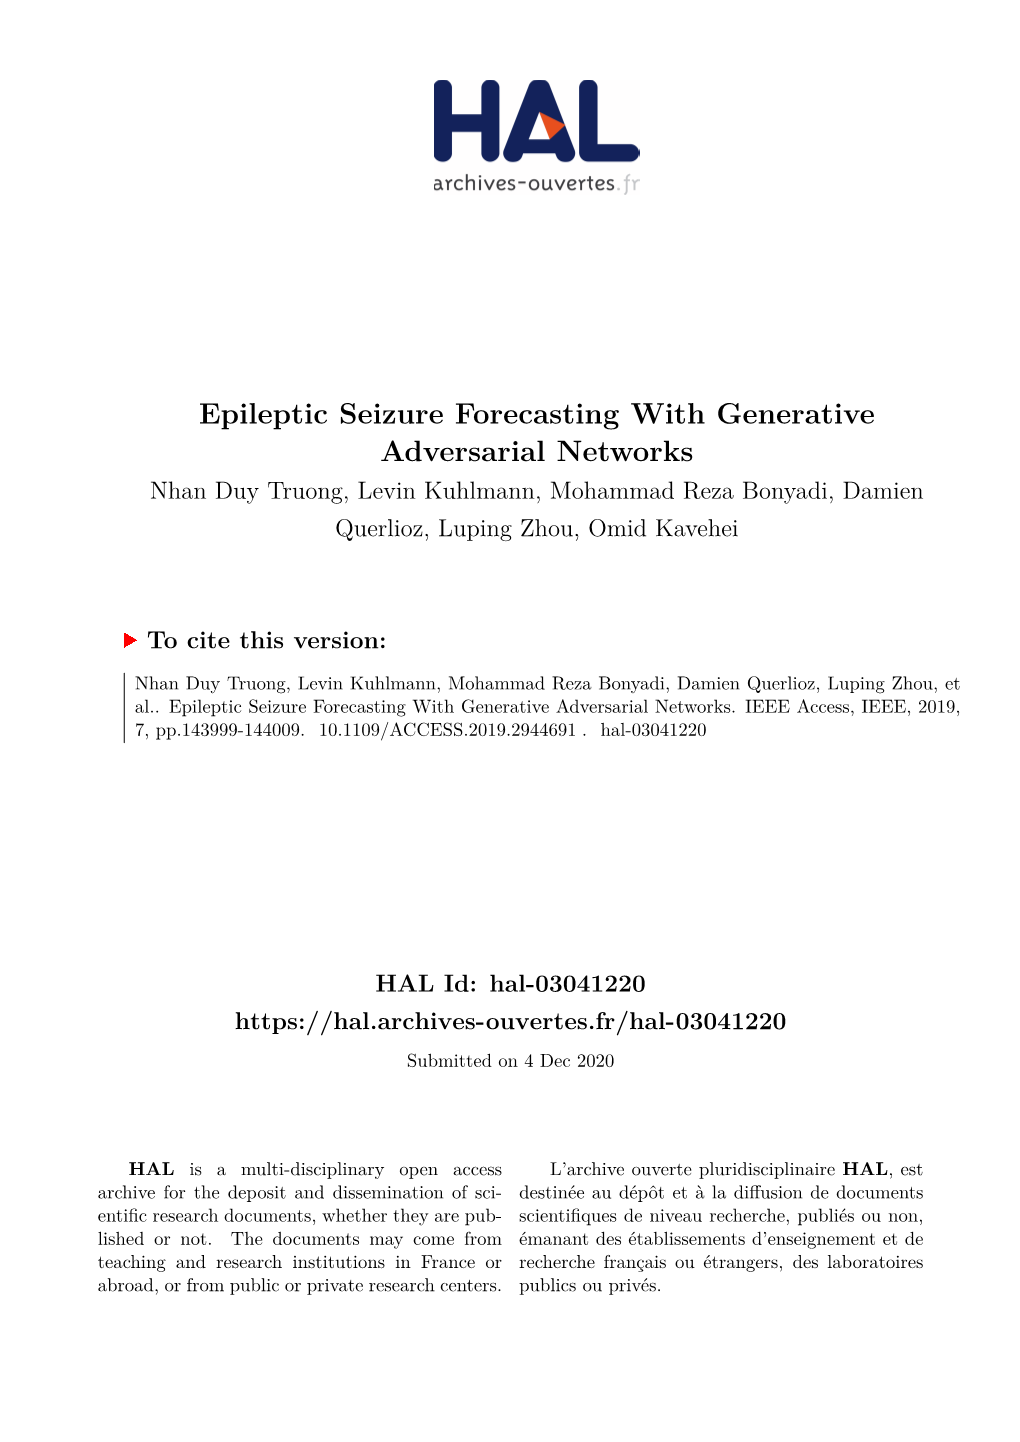 Epileptic Seizure Forecasting with Generative Adversarial Networks Nhan Duy Truong, Levin Kuhlmann, Mohammad Reza Bonyadi, Damien Querlioz, Luping Zhou, Omid Kavehei